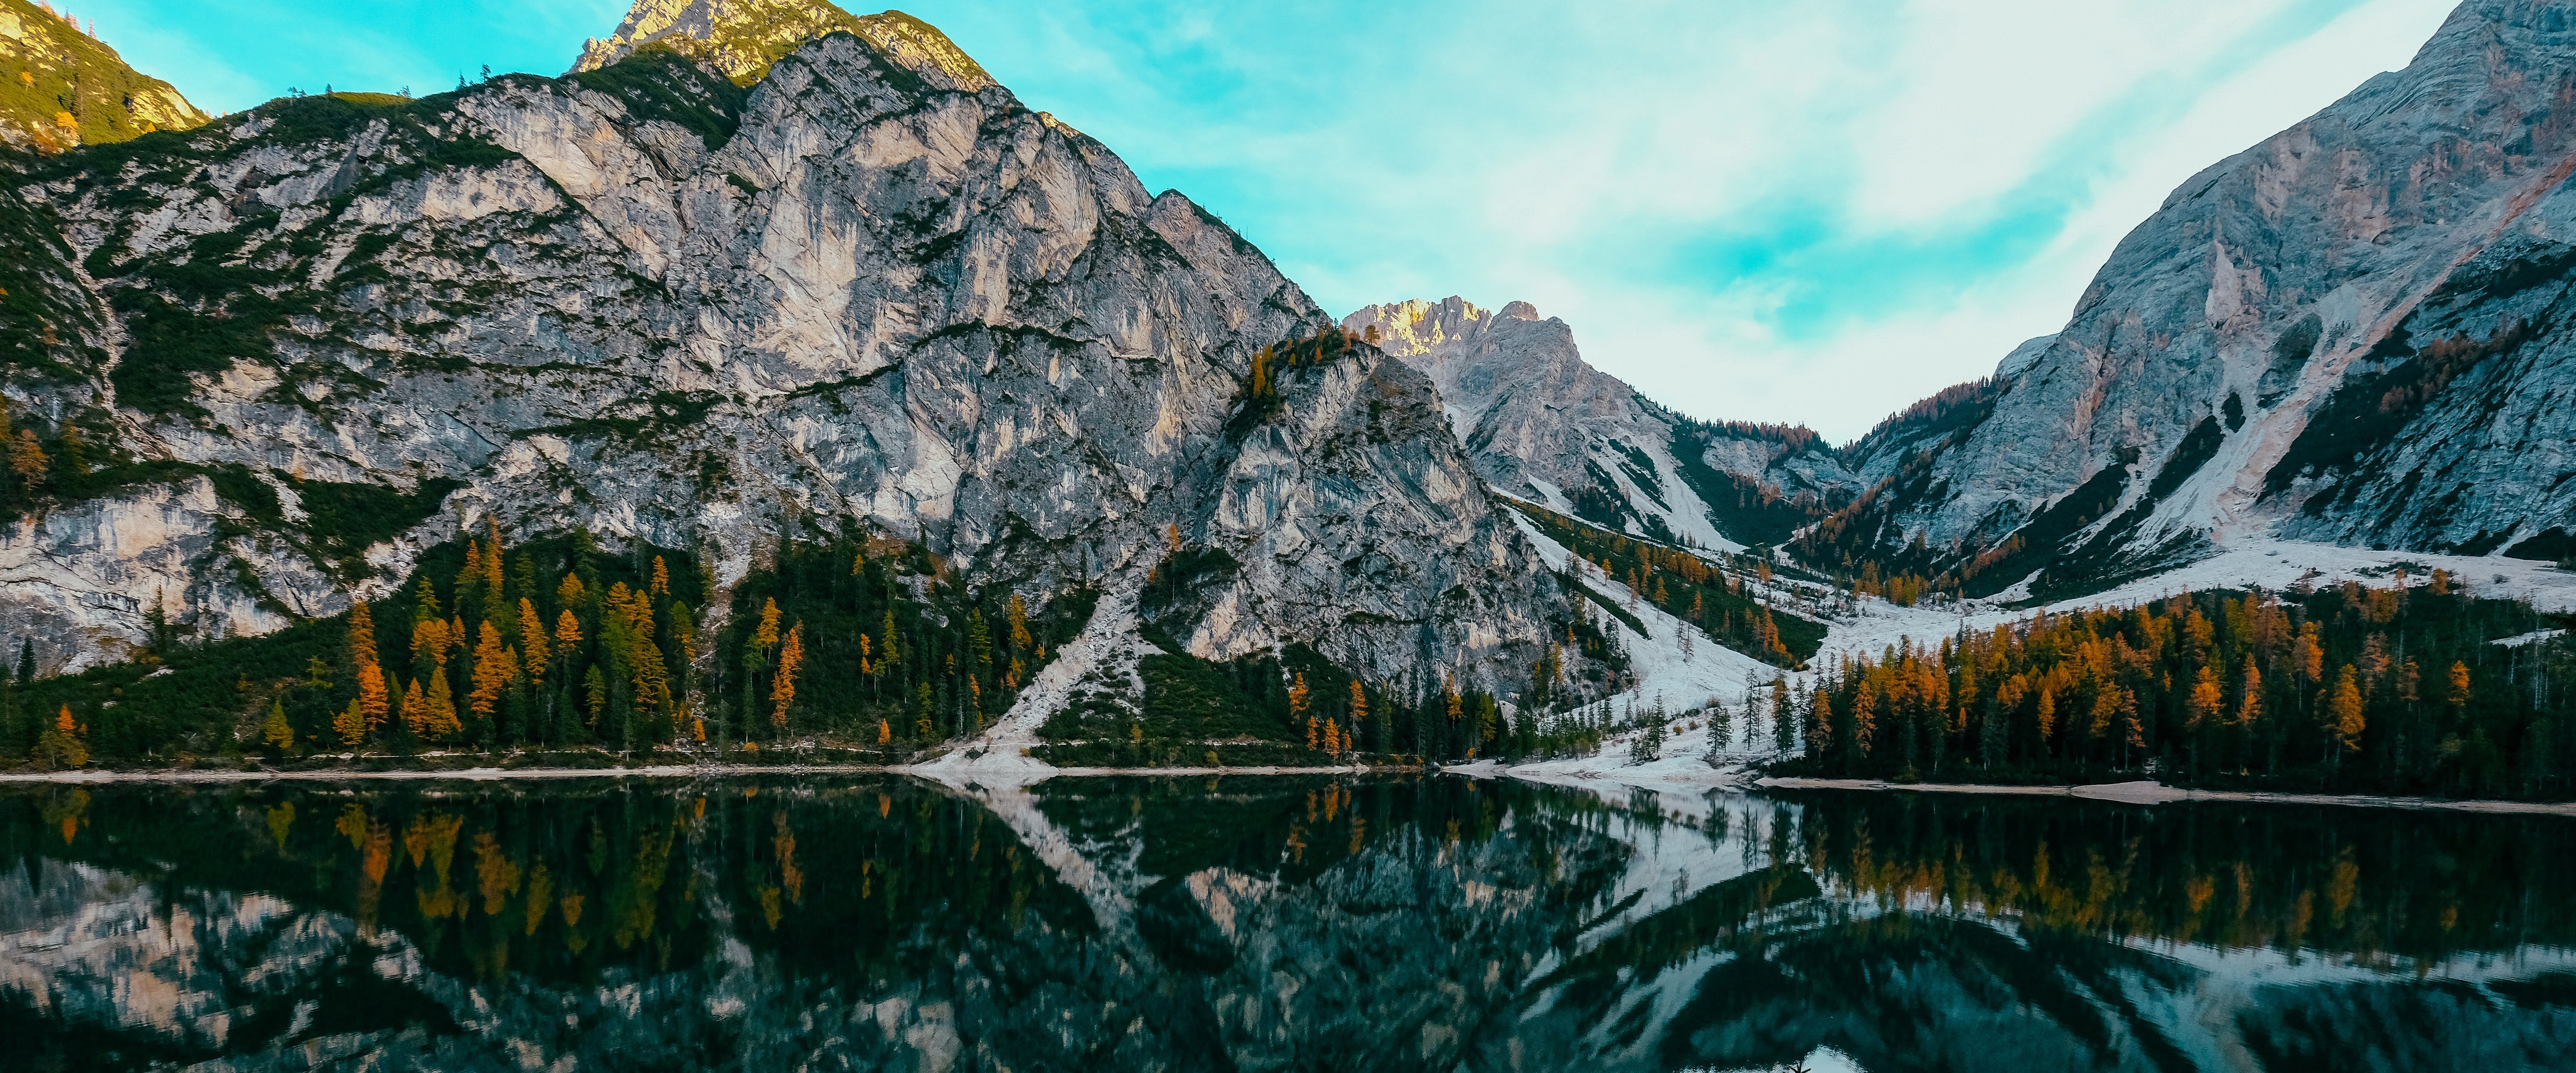 Mountain Nature Lake Landscape Scenery 8K Wallpaper